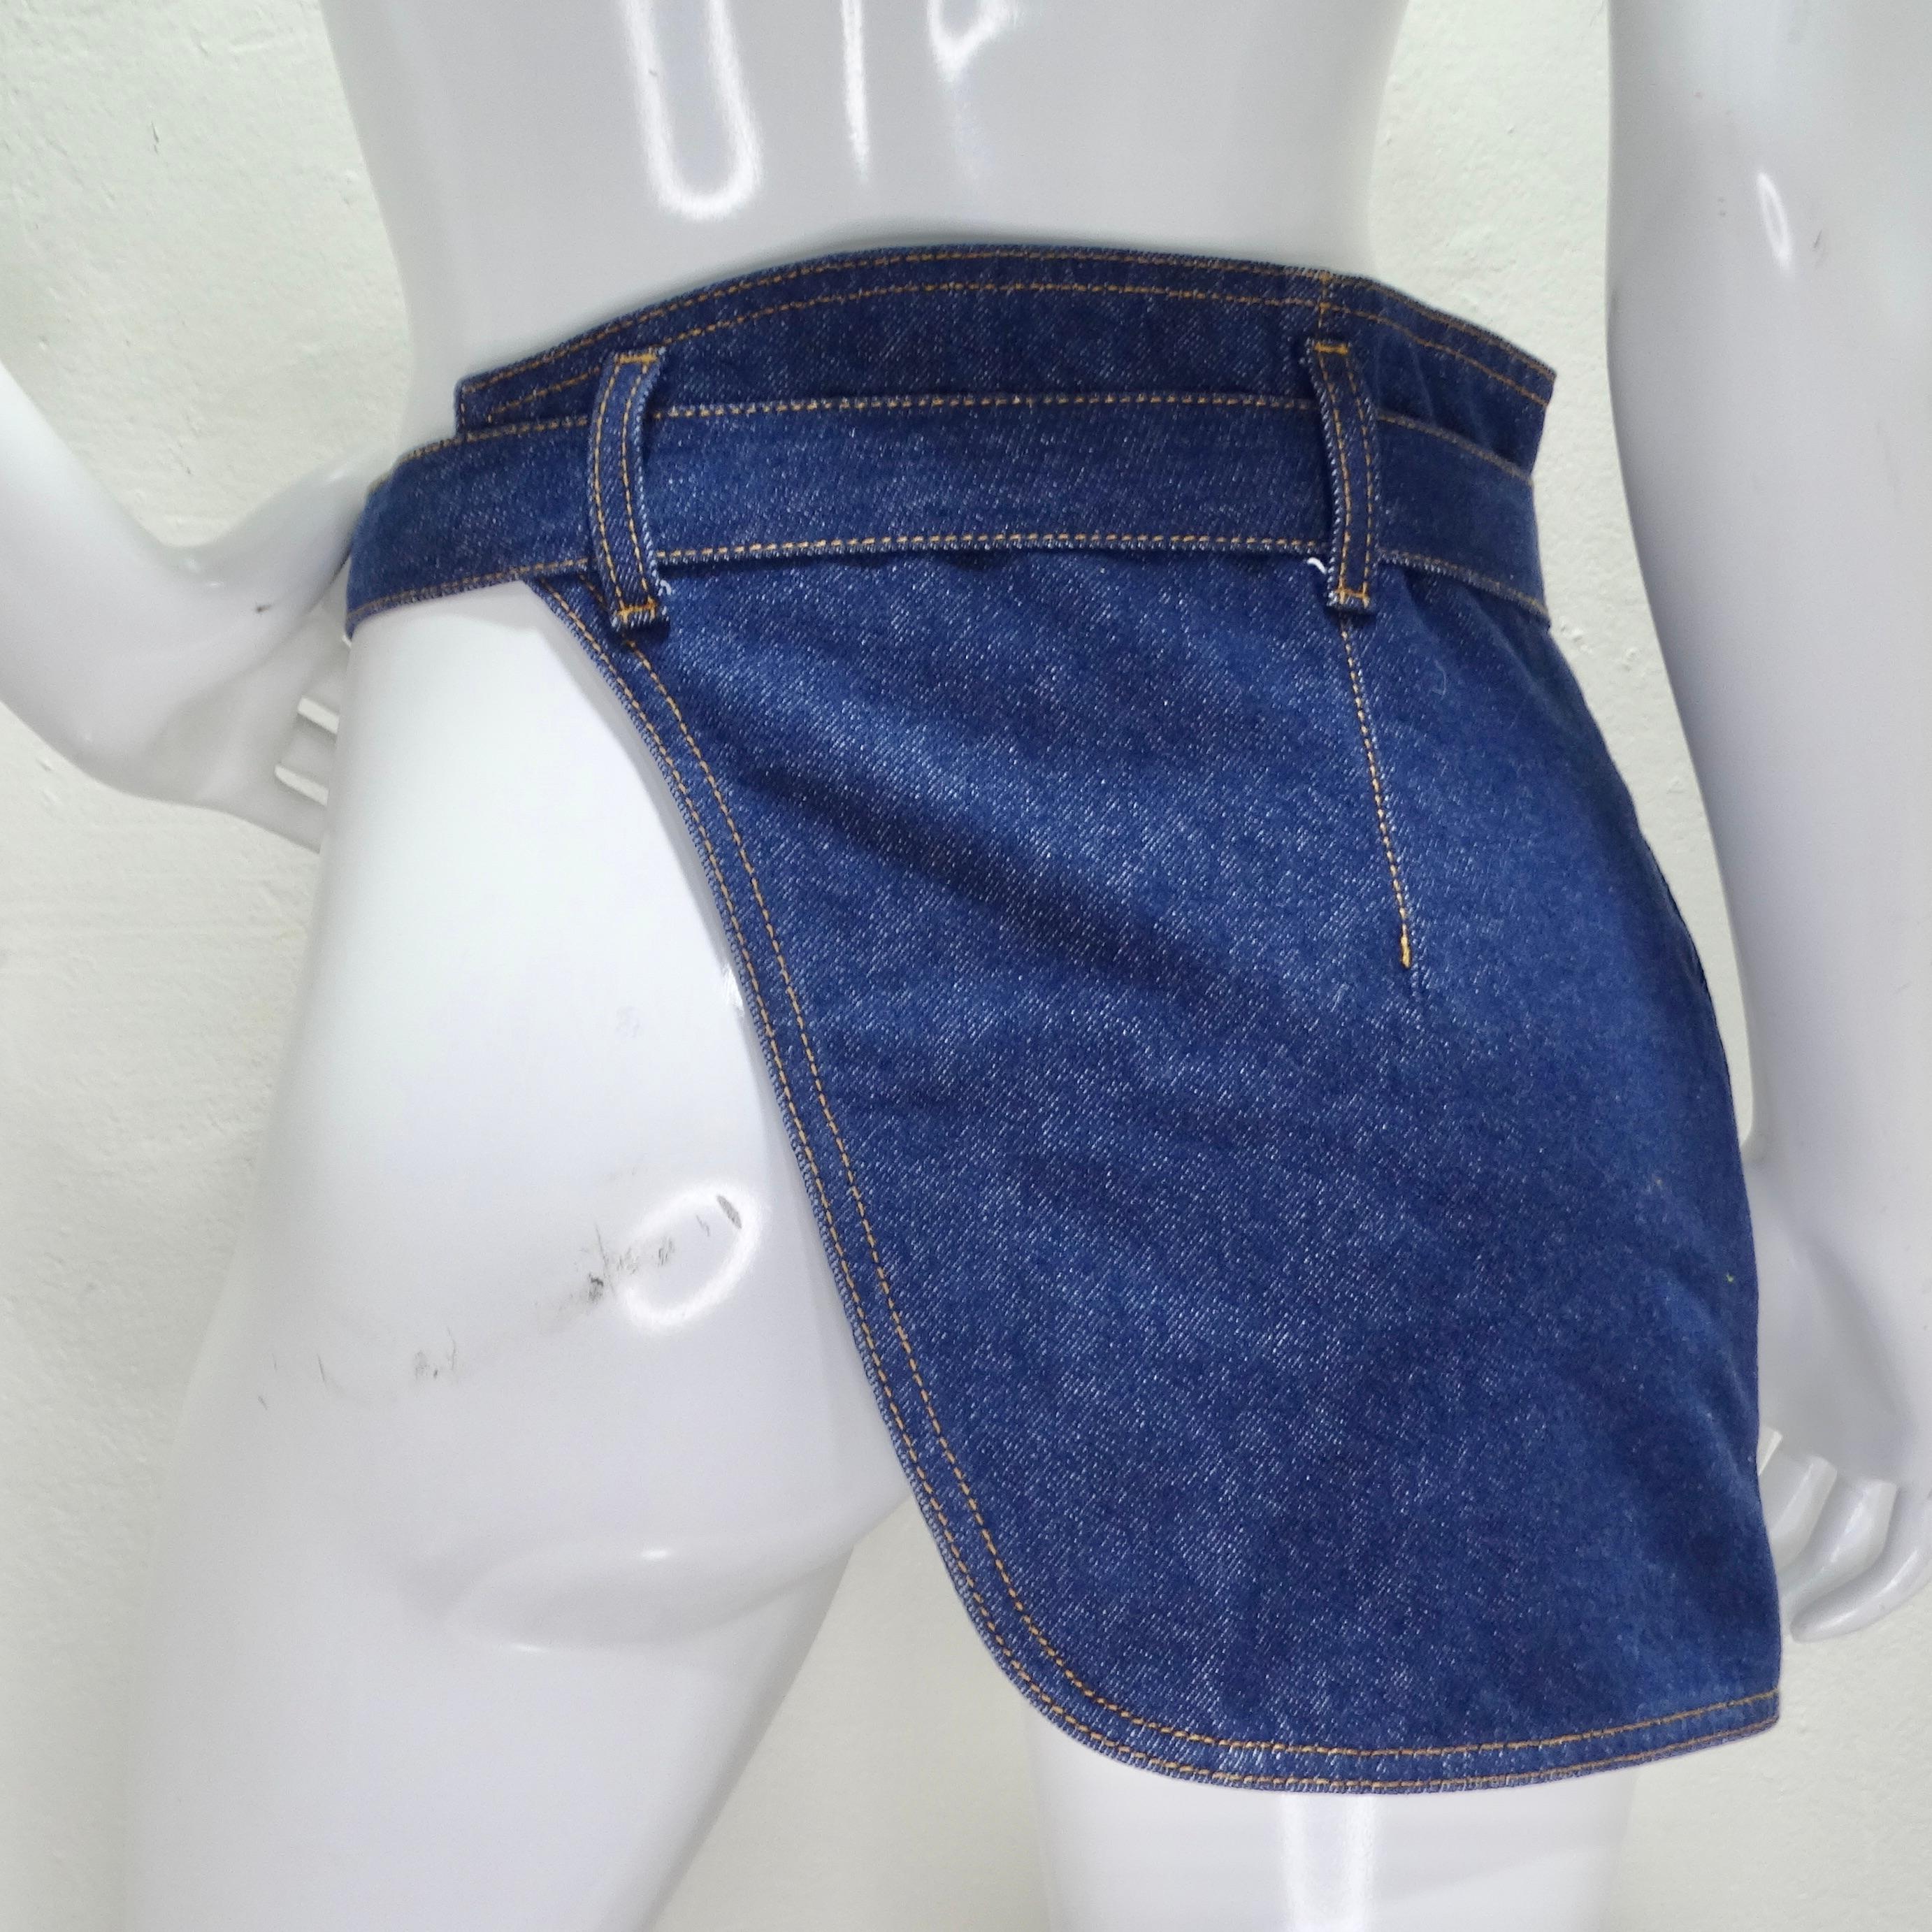 Fendi Denim Skirt Belt In Excellent Condition For Sale In Scottsdale, AZ